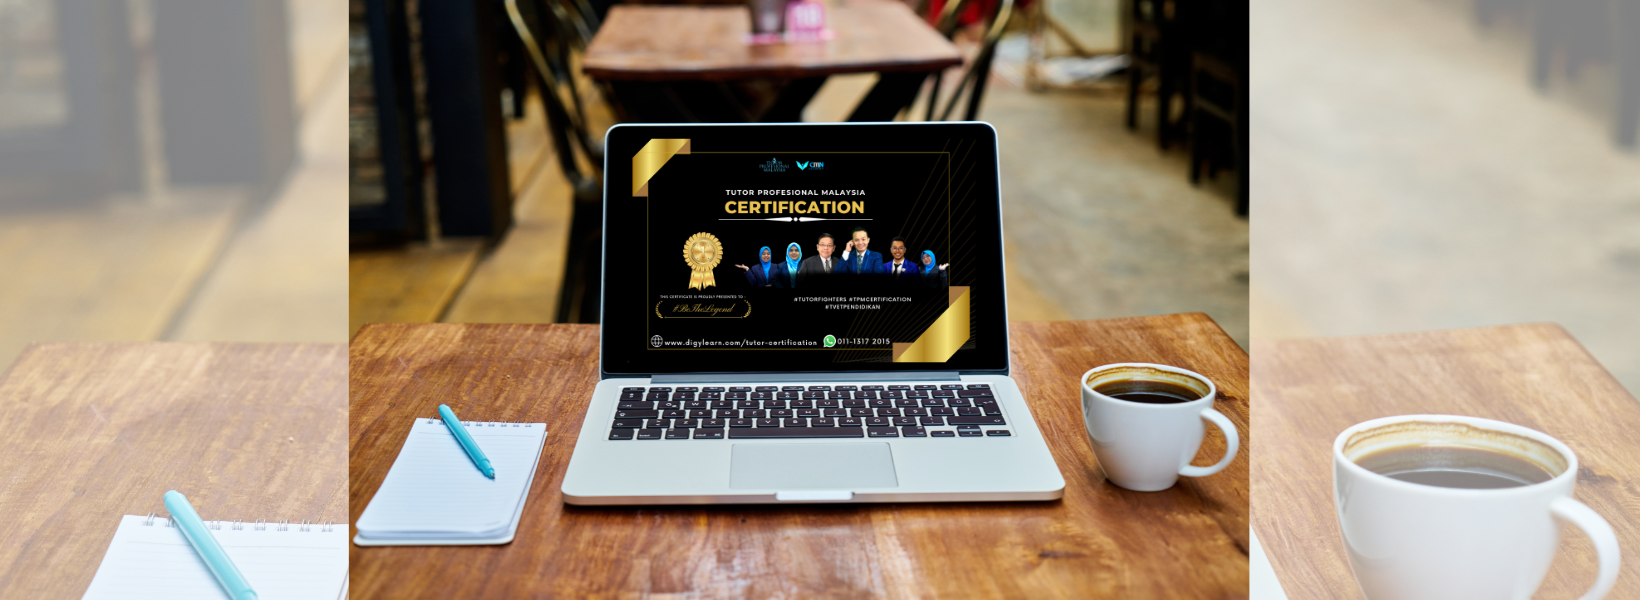 Tutor Profesional Malaysia Certification